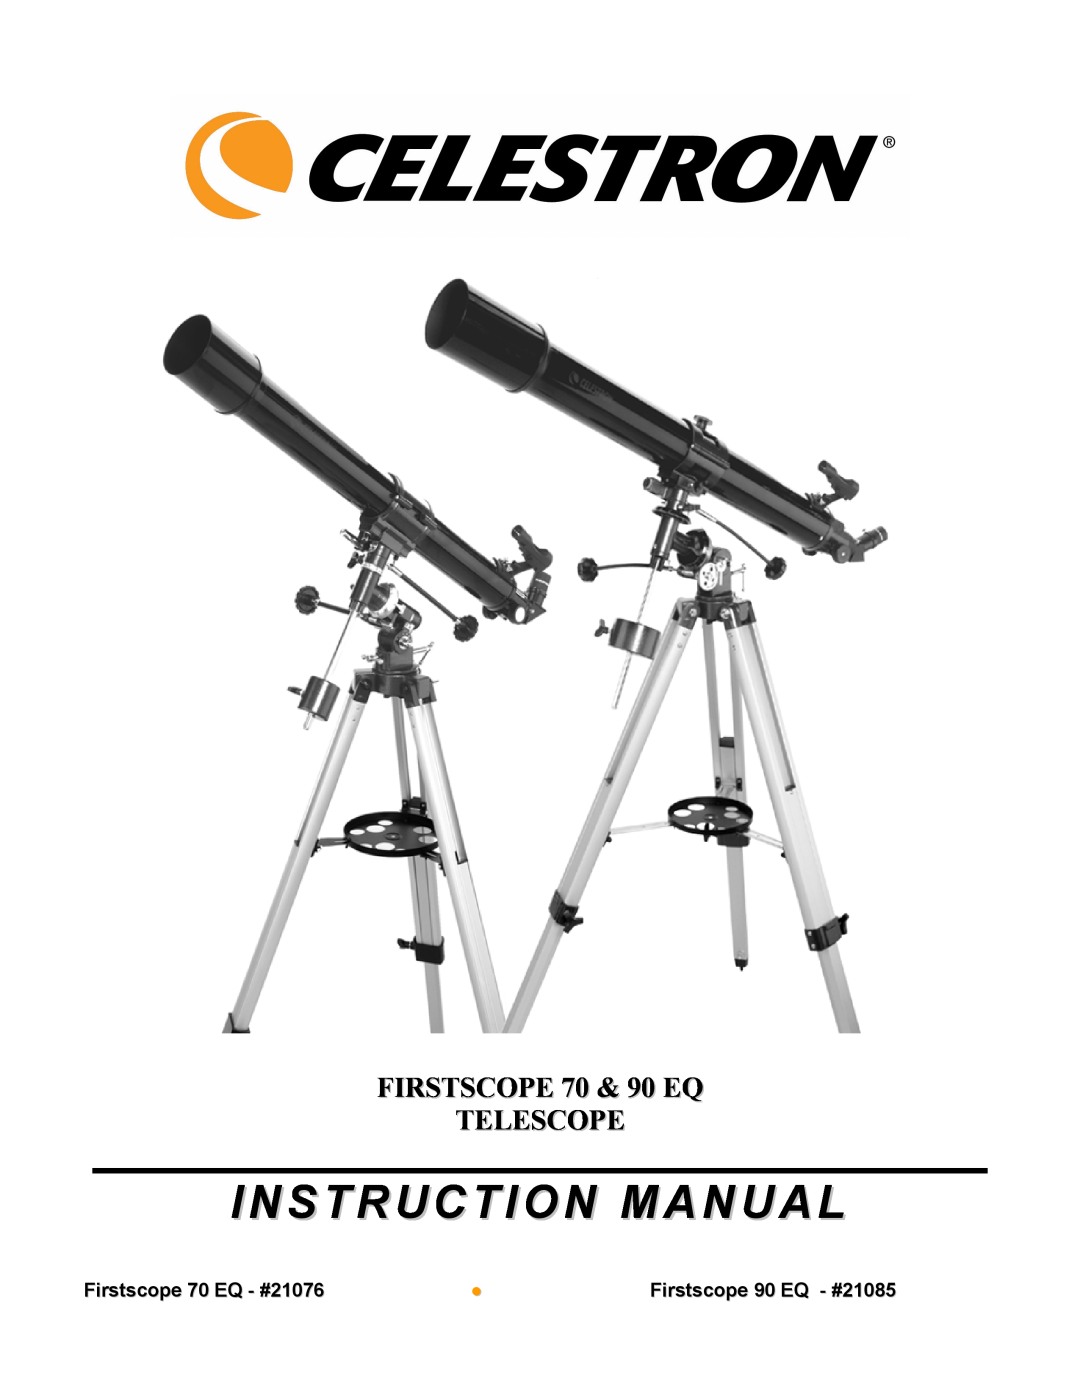 Celestron manual FIRSTSCOPE 70 & 90 EQ TELESCOPE, Firstscope 70 EQ - #21076, Firstscope 90 EQ - #21085 